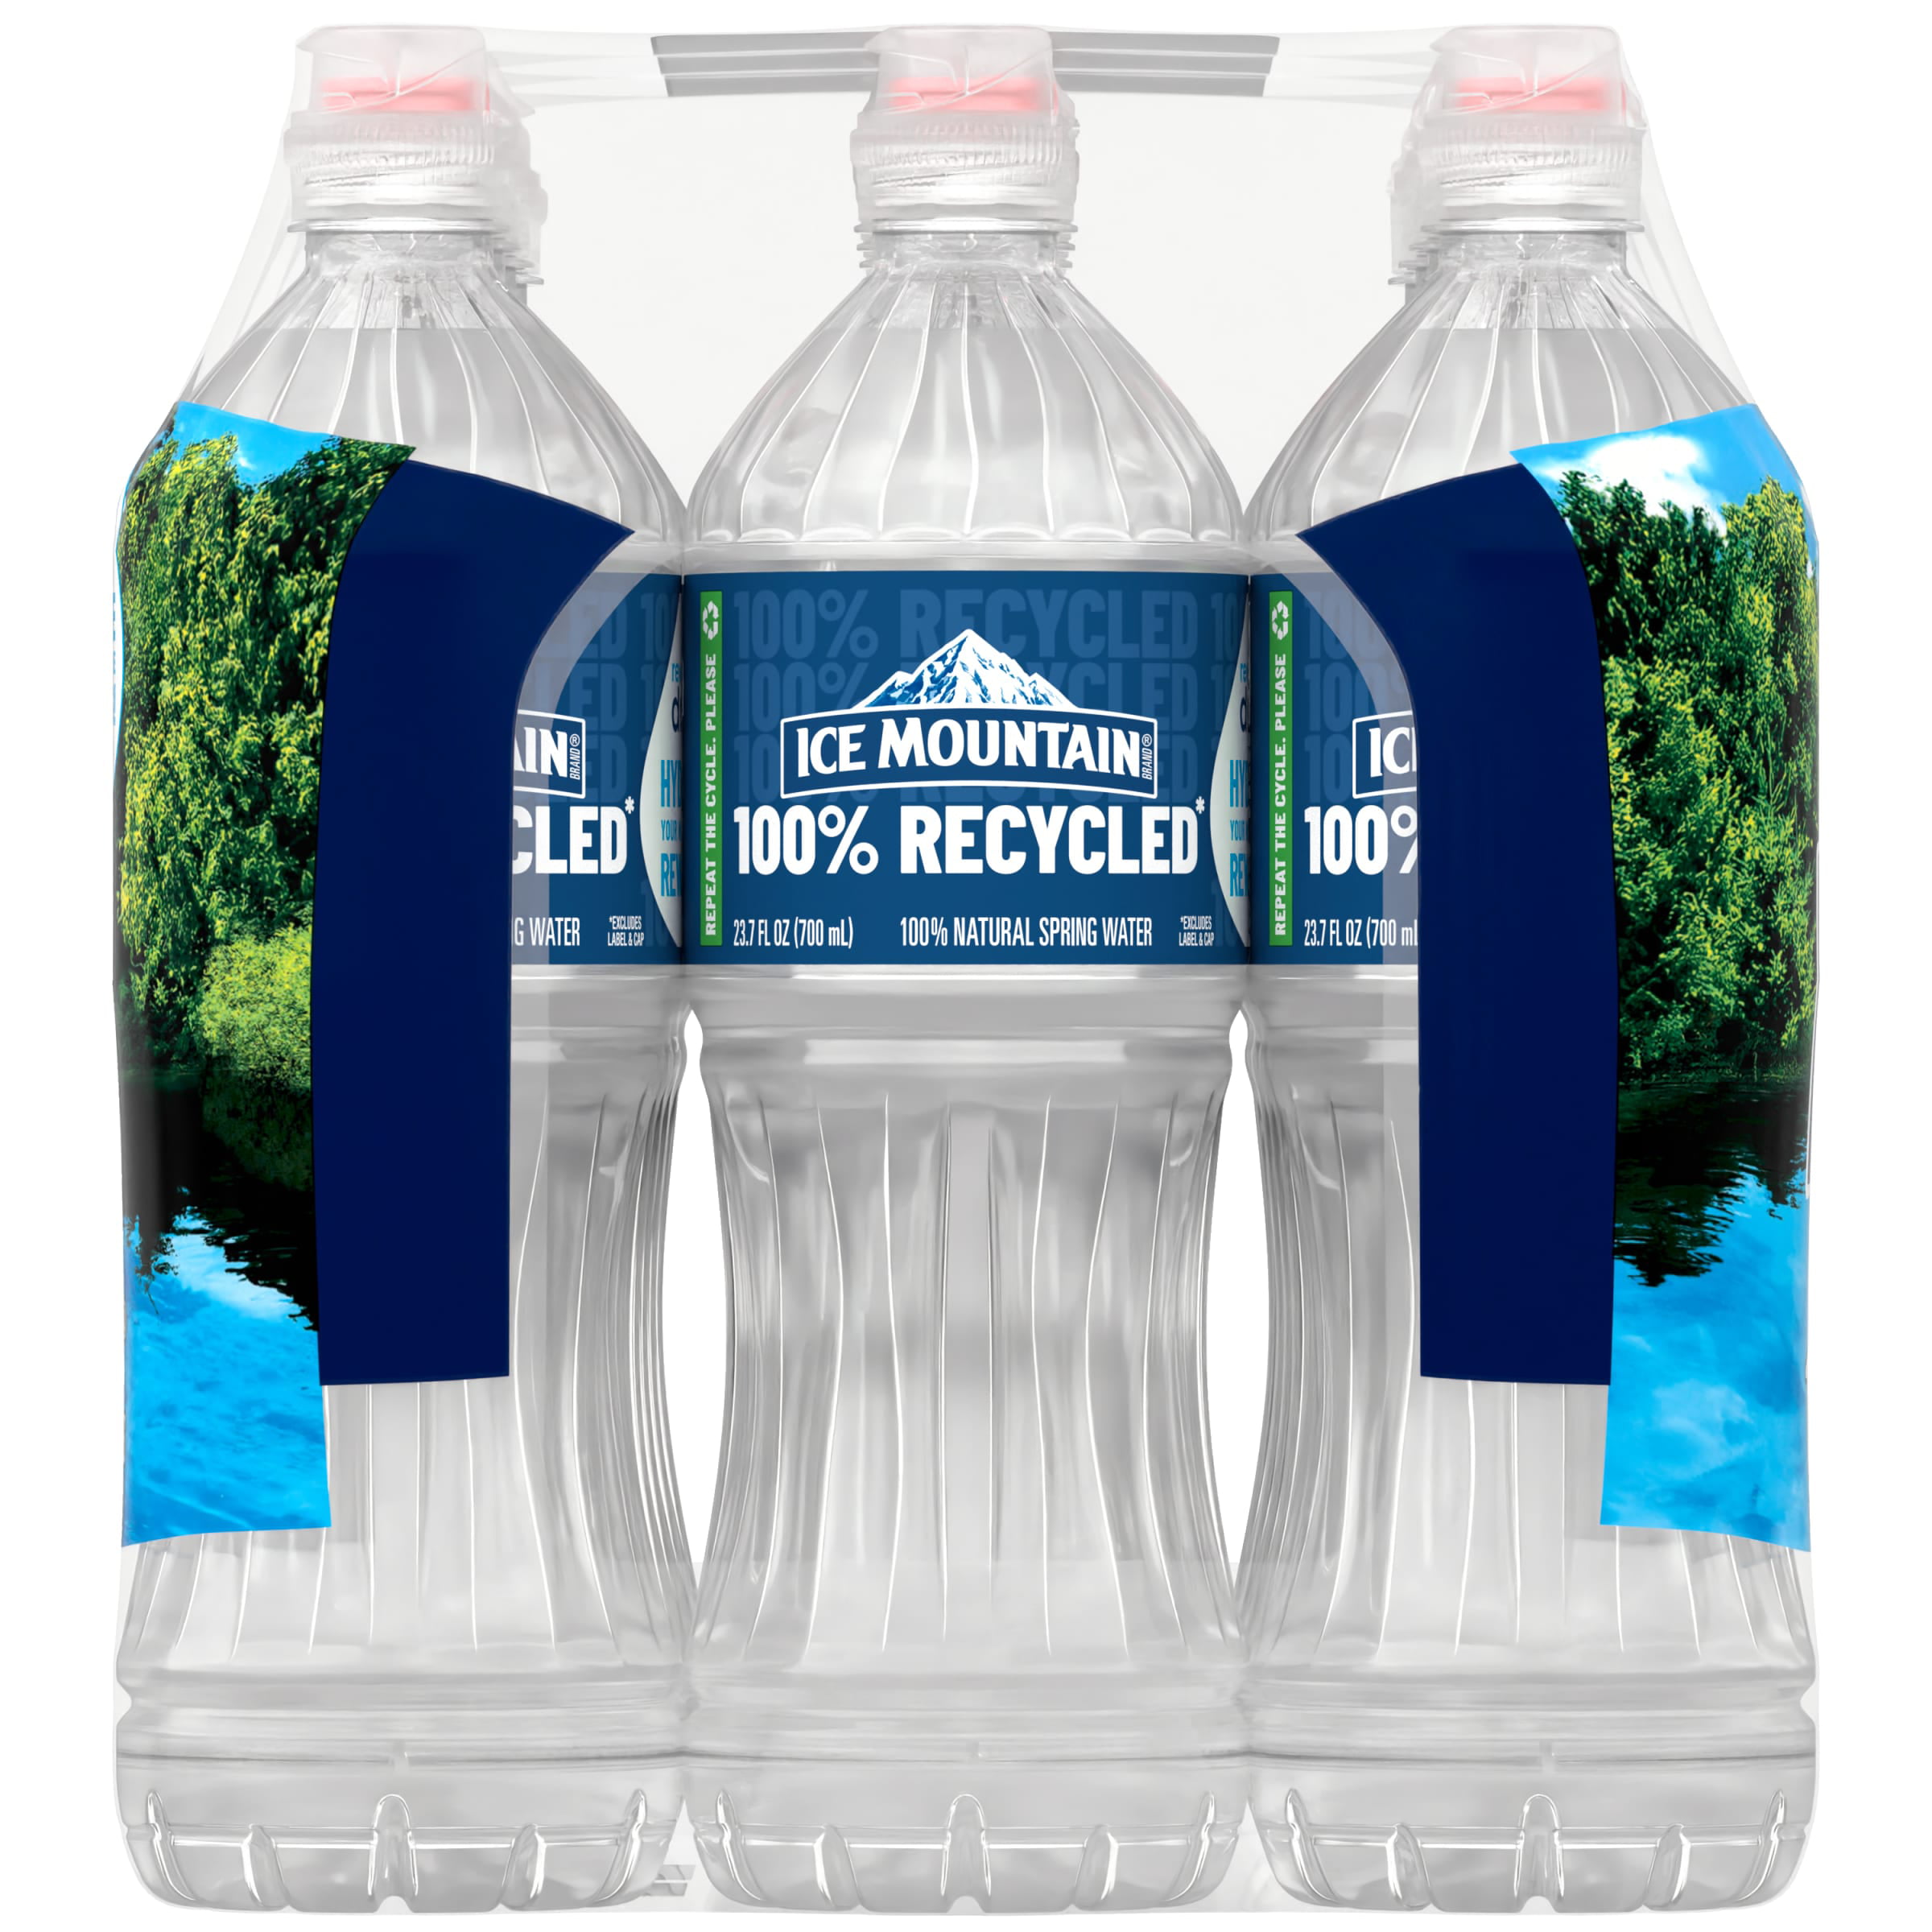  Bottled Water - 8 oz. - Sport Cap 103195-8-SC